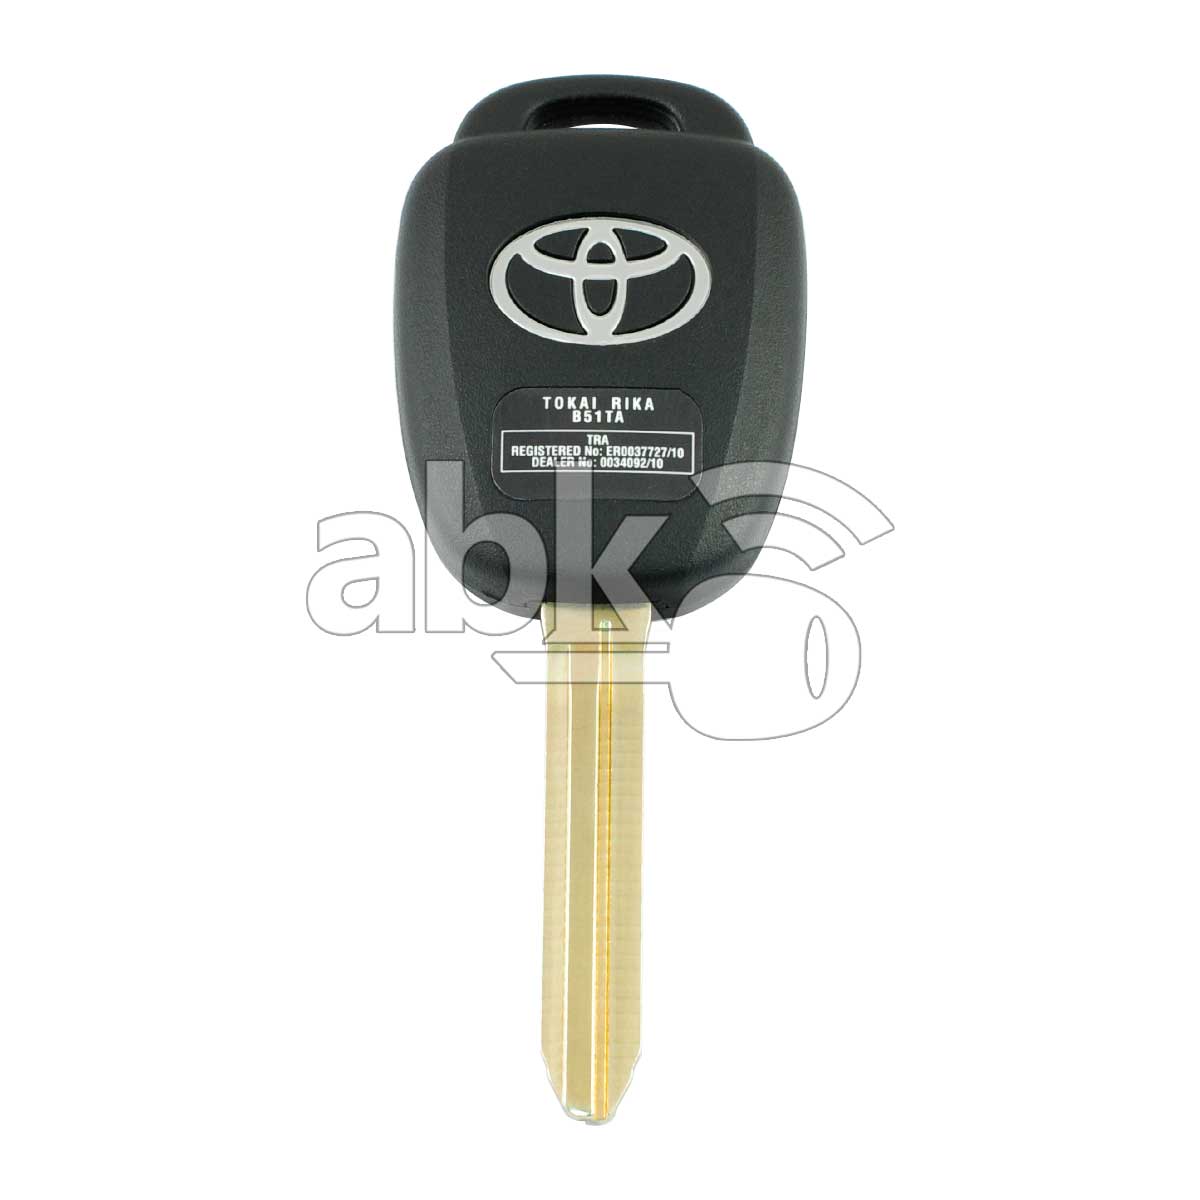 Genuine Toyota Yaris 2012+ Key Head Remote 2Buttons 89070-52F40 433MHz B51TA TOY43 - ABK-2727 -